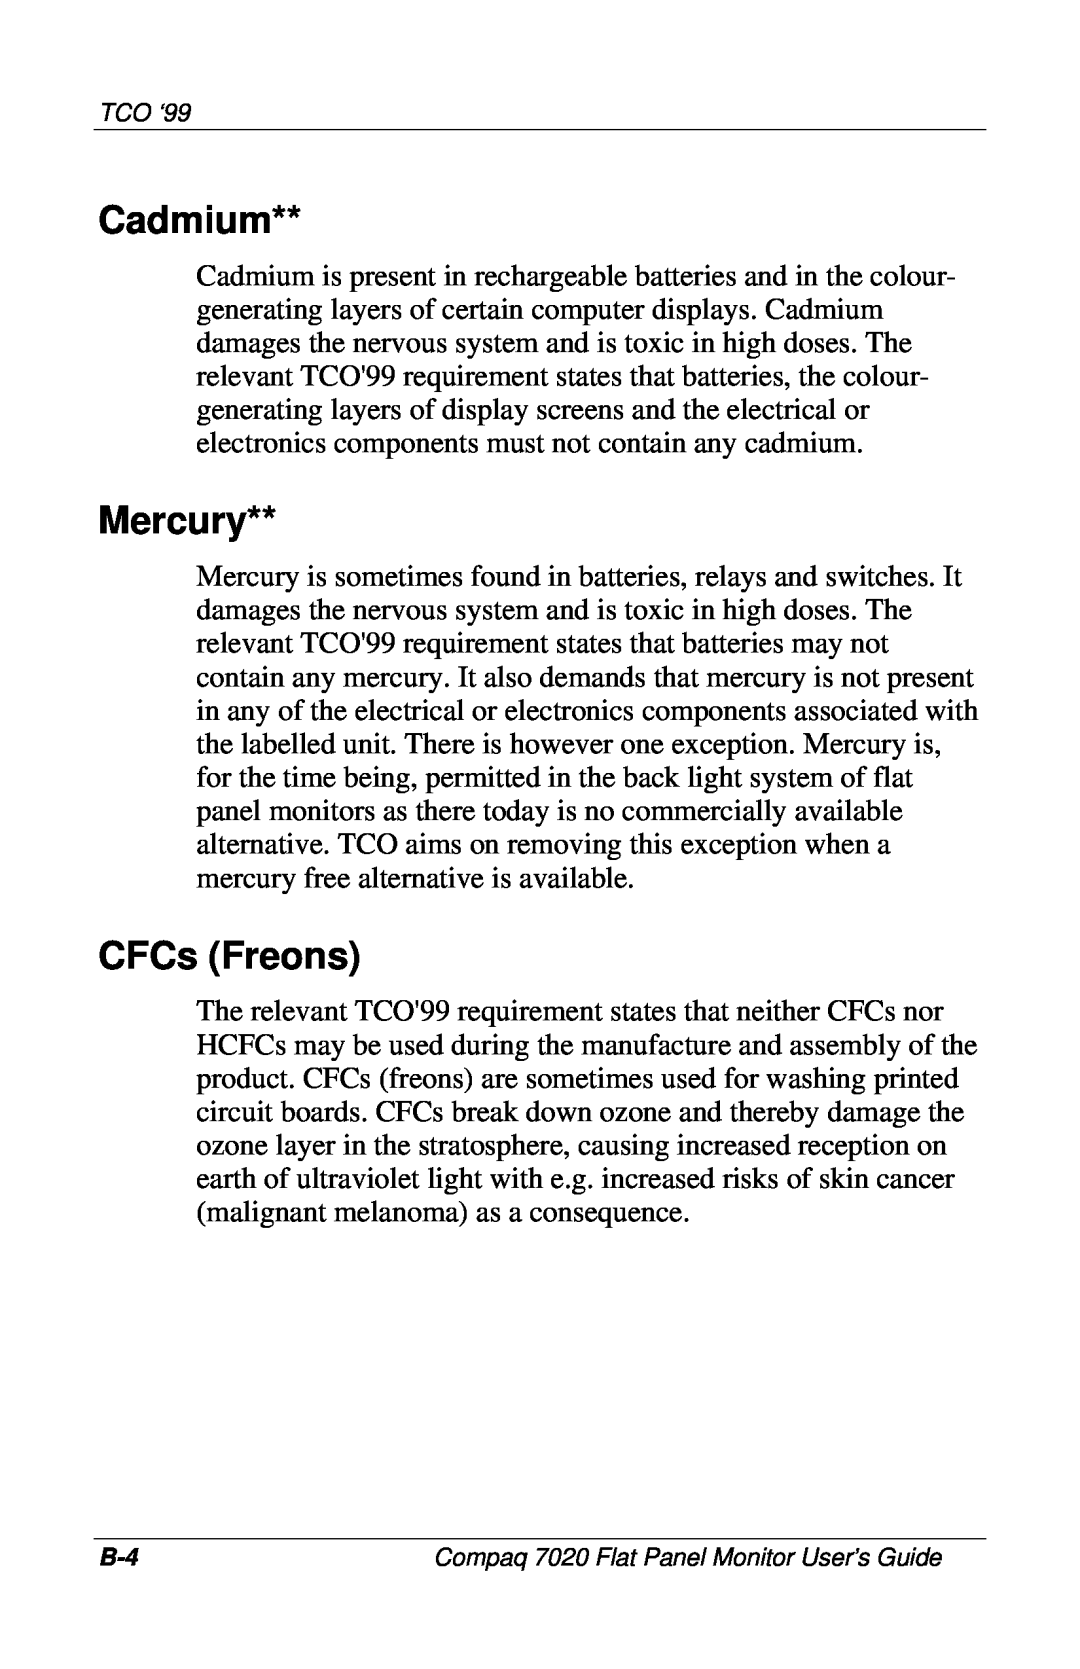 Compaq 7020 manual Cadmium, Mercury, CFCs Freons 